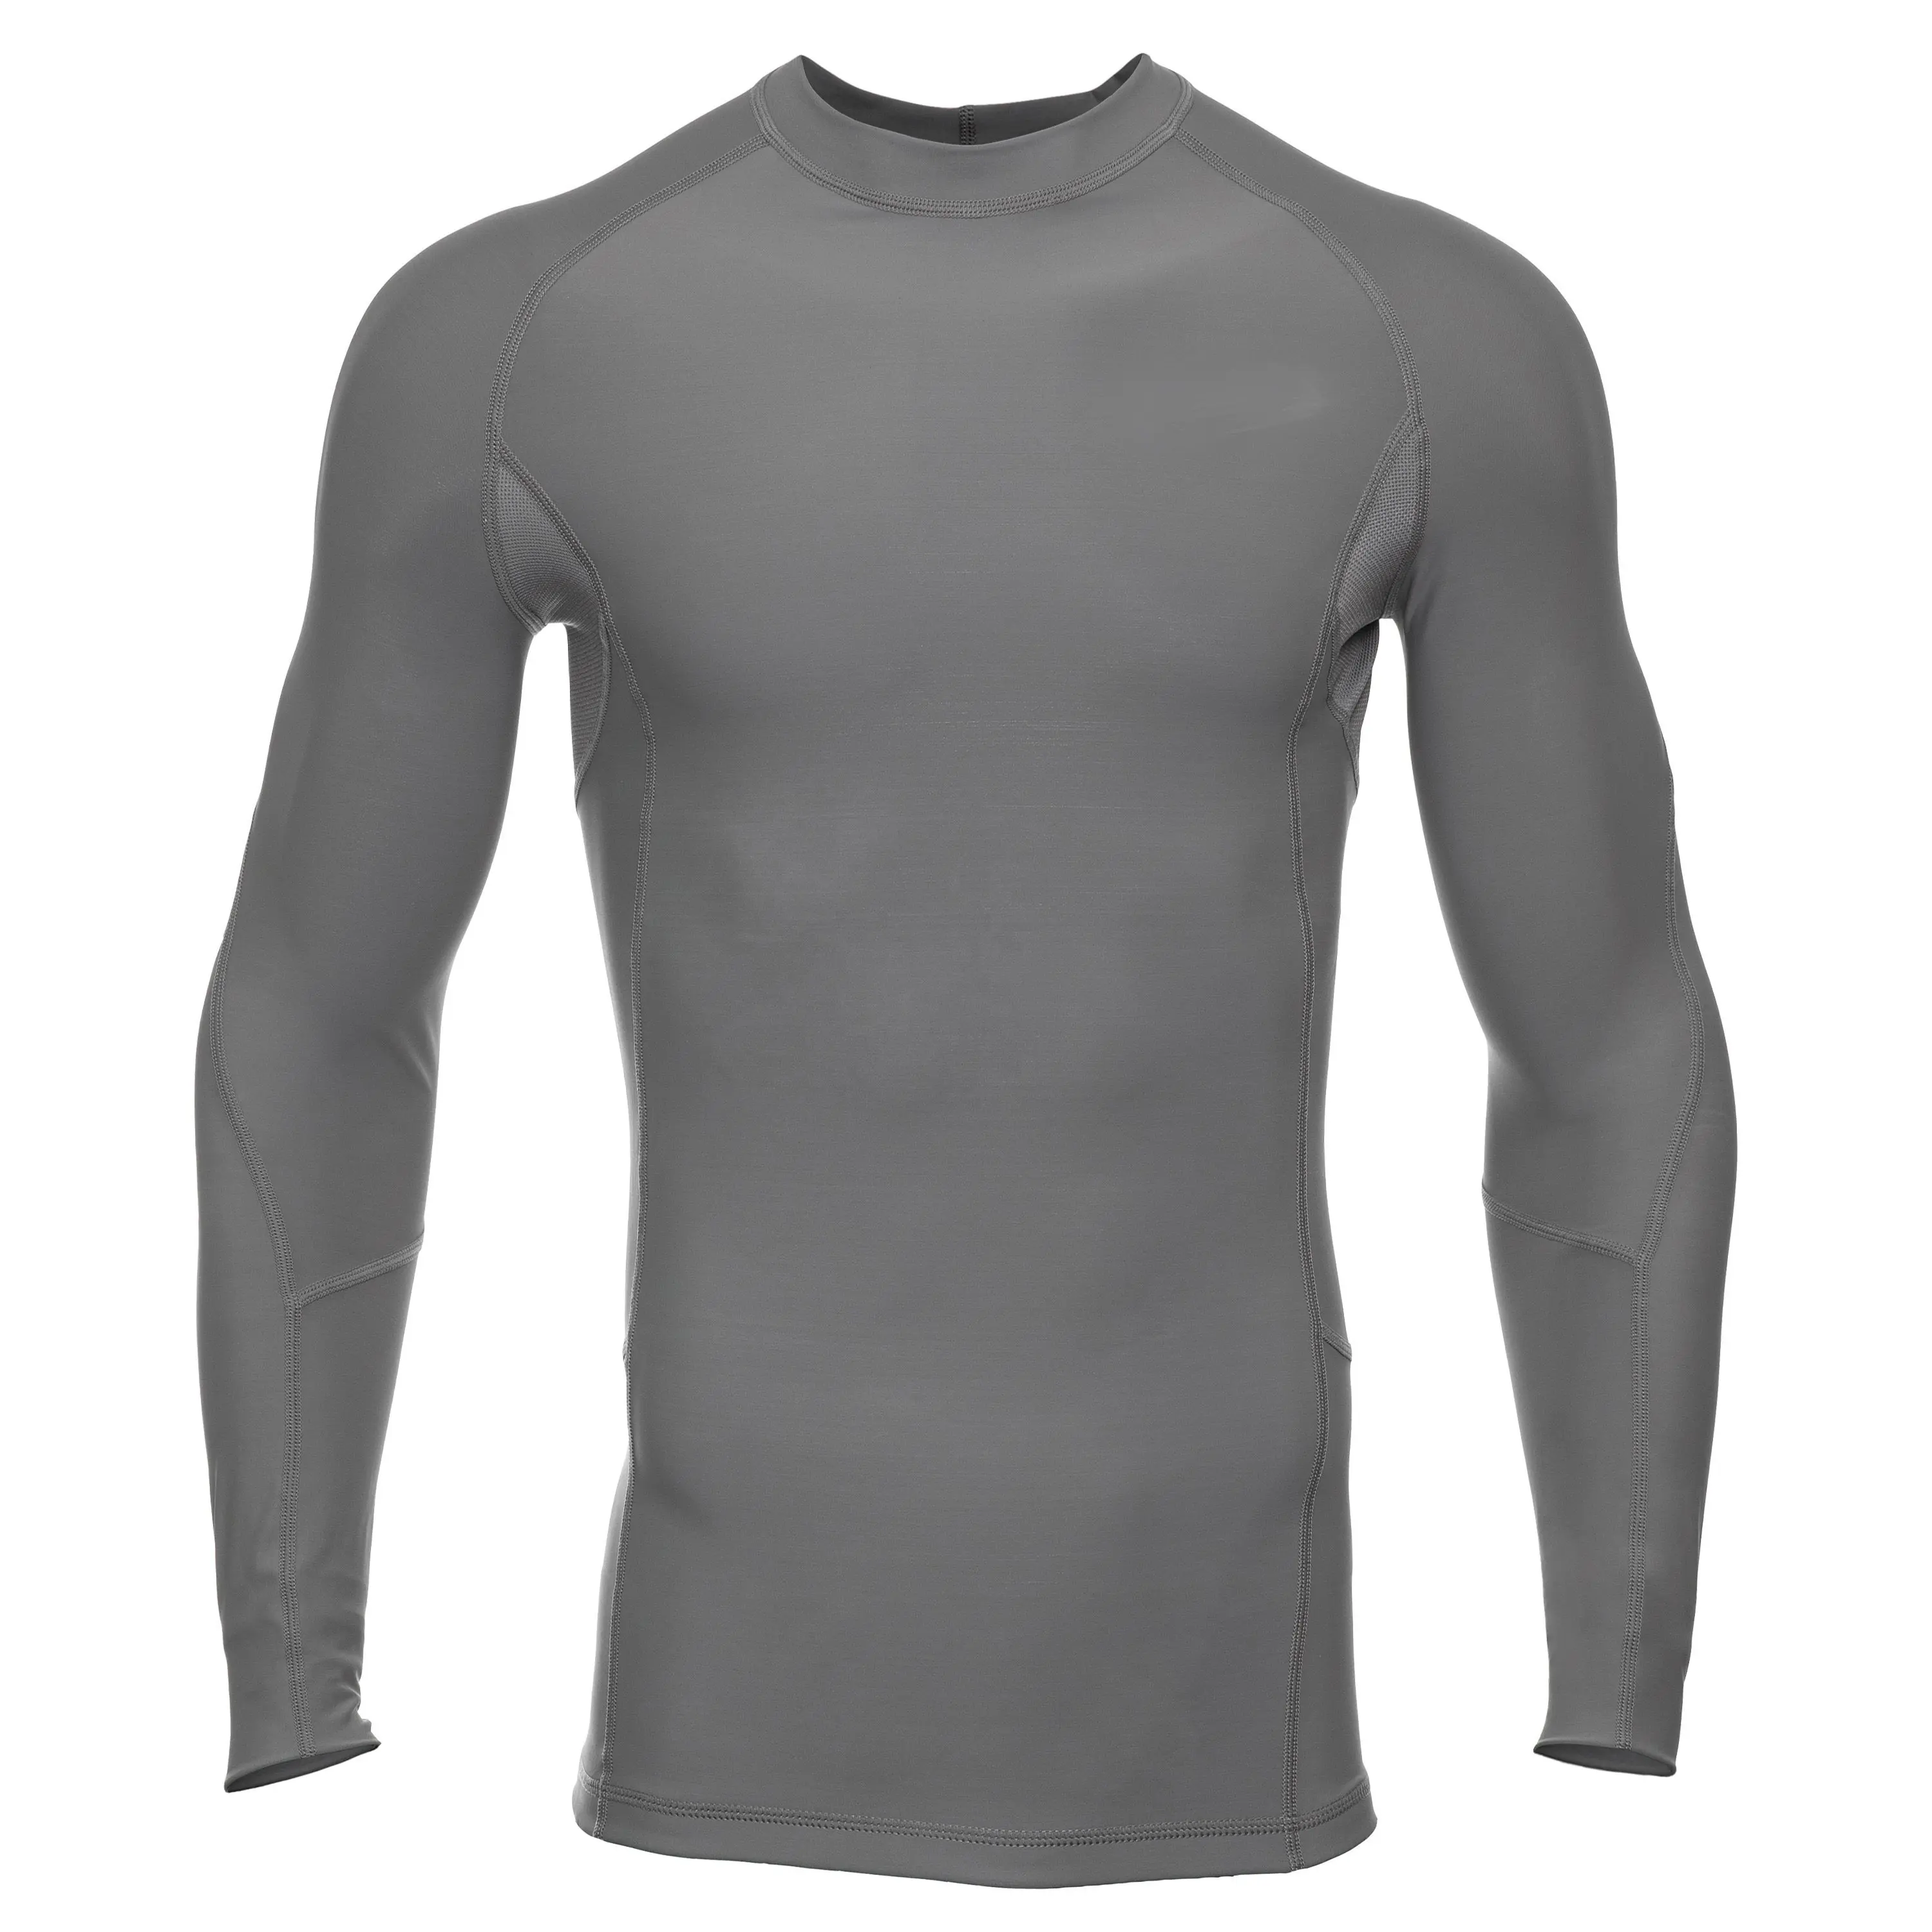 Shirt Polyester/spandex Long sleeve swim shirts custom compression rash guards swim shirt high quality materials for mens